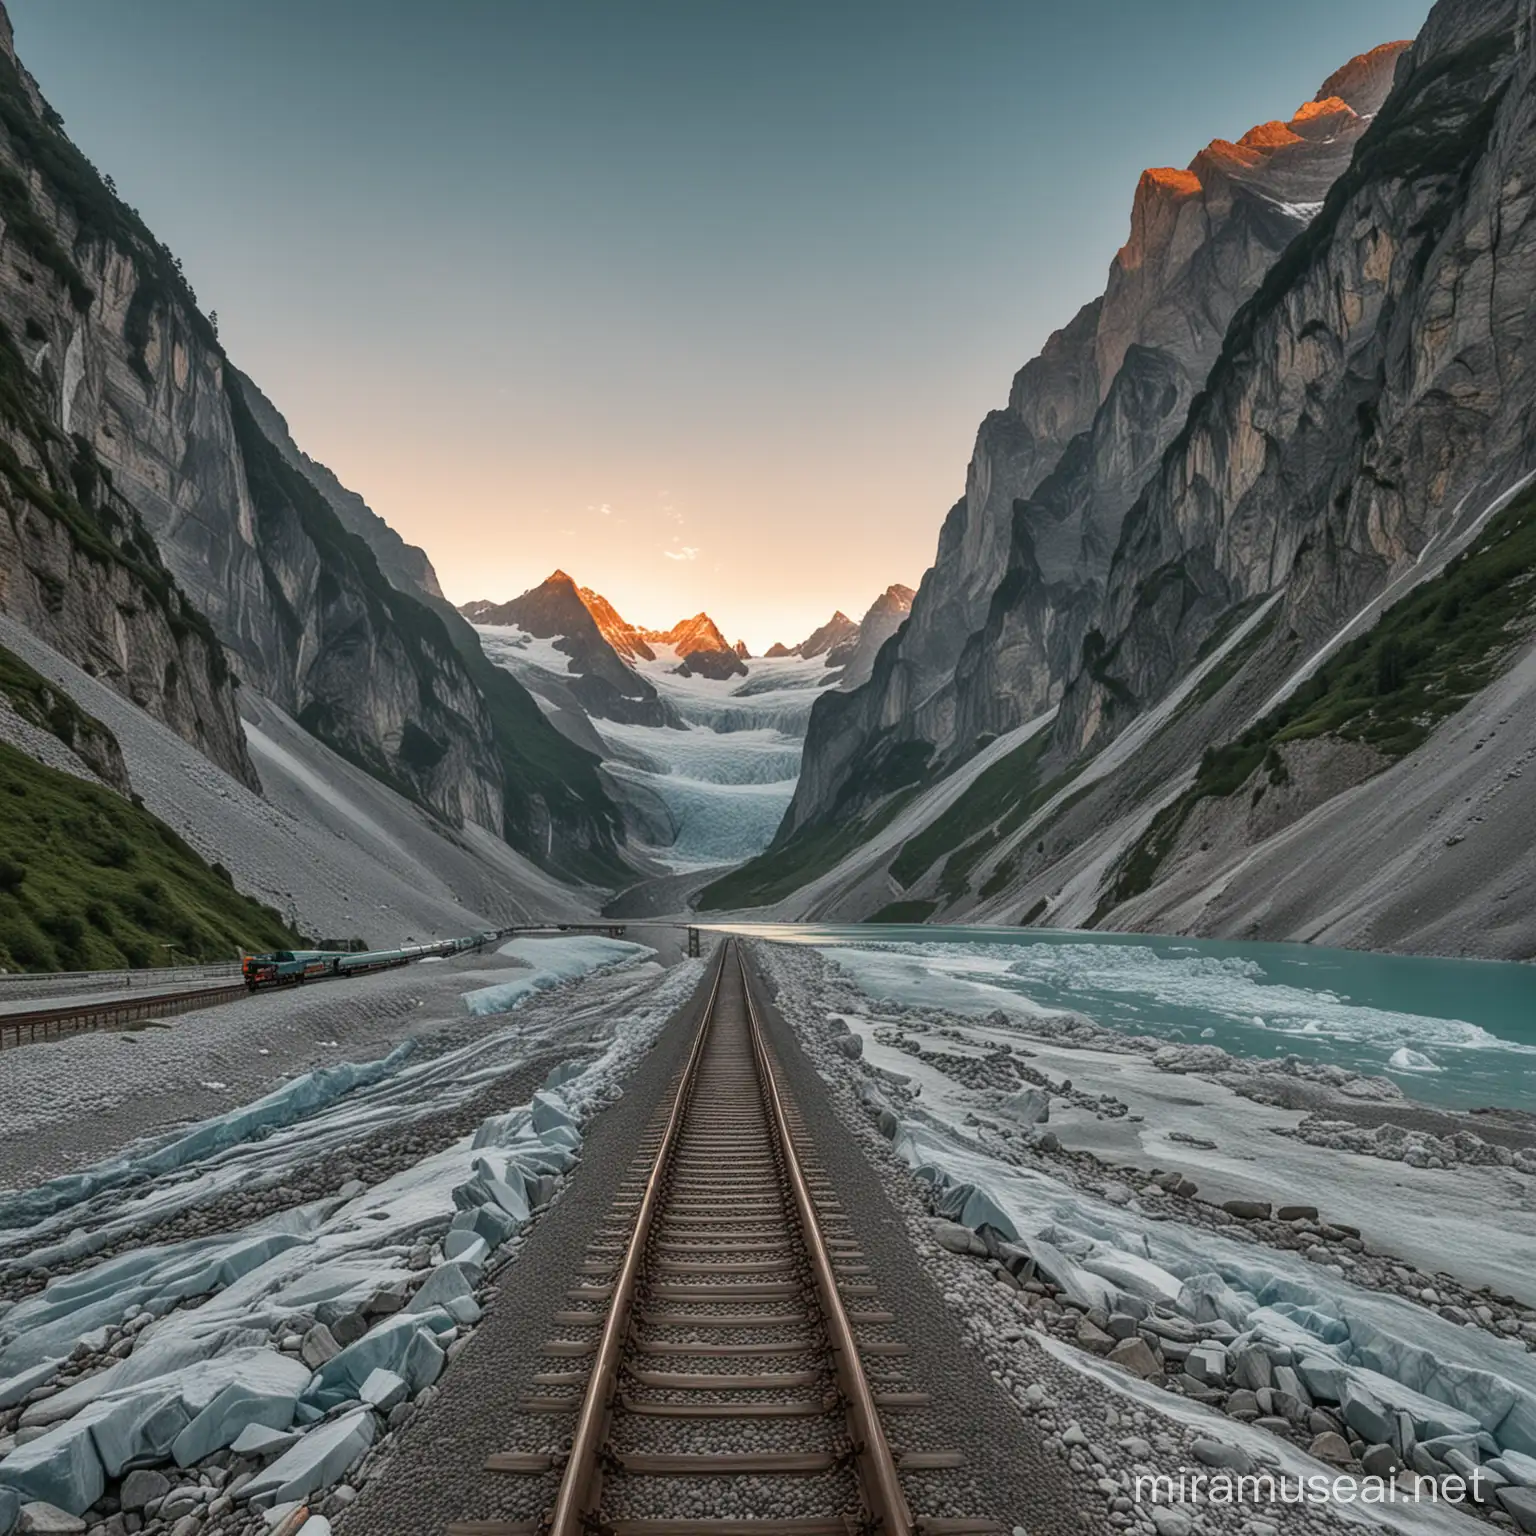 Sunset Mountain Train Journey in Switzerland with Glacier Lake